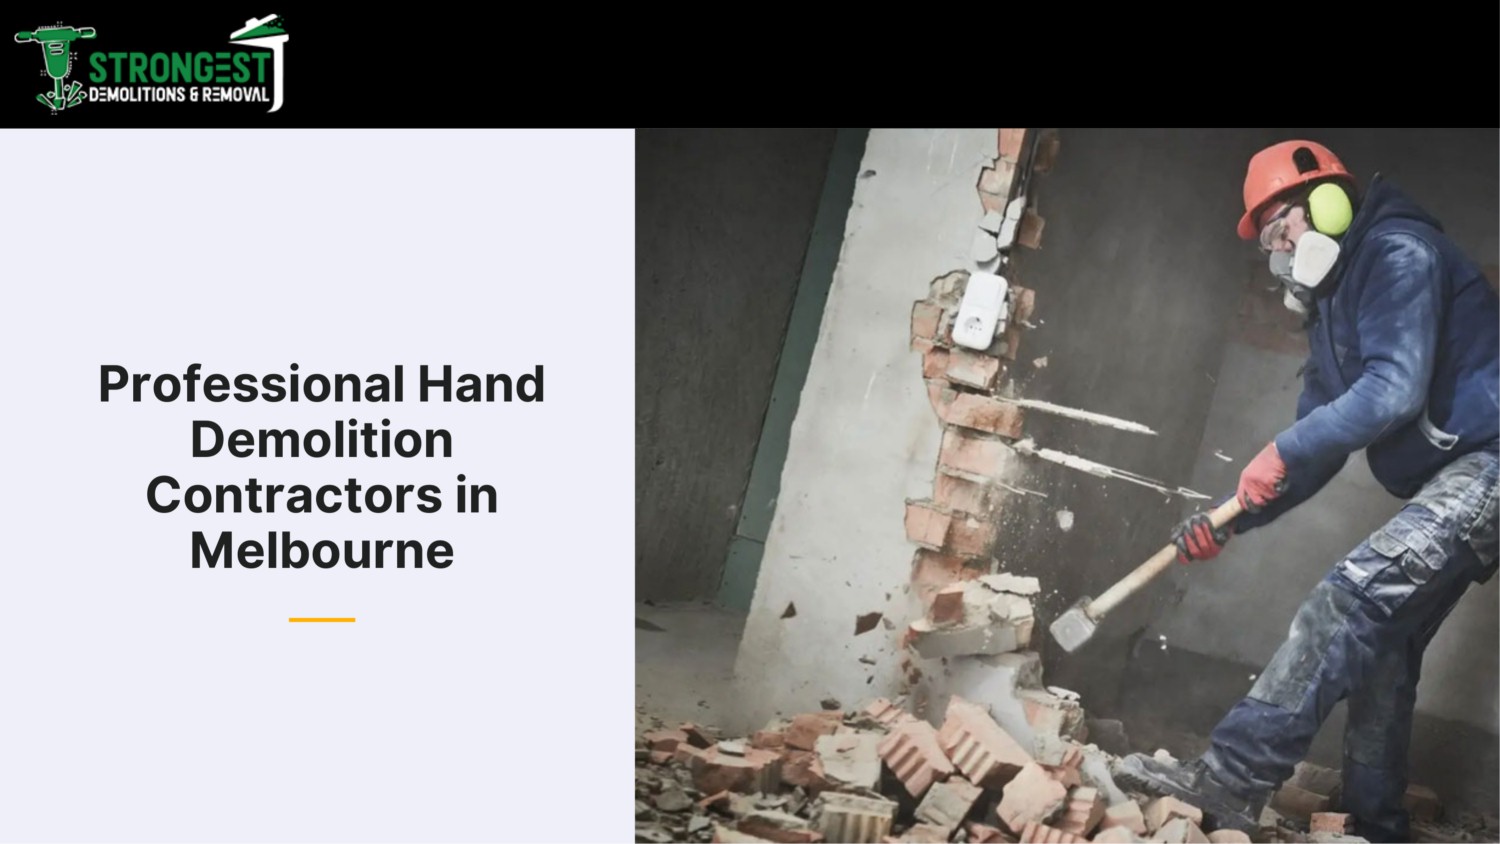 Professional Hand Demolition Contractors in Melbourne